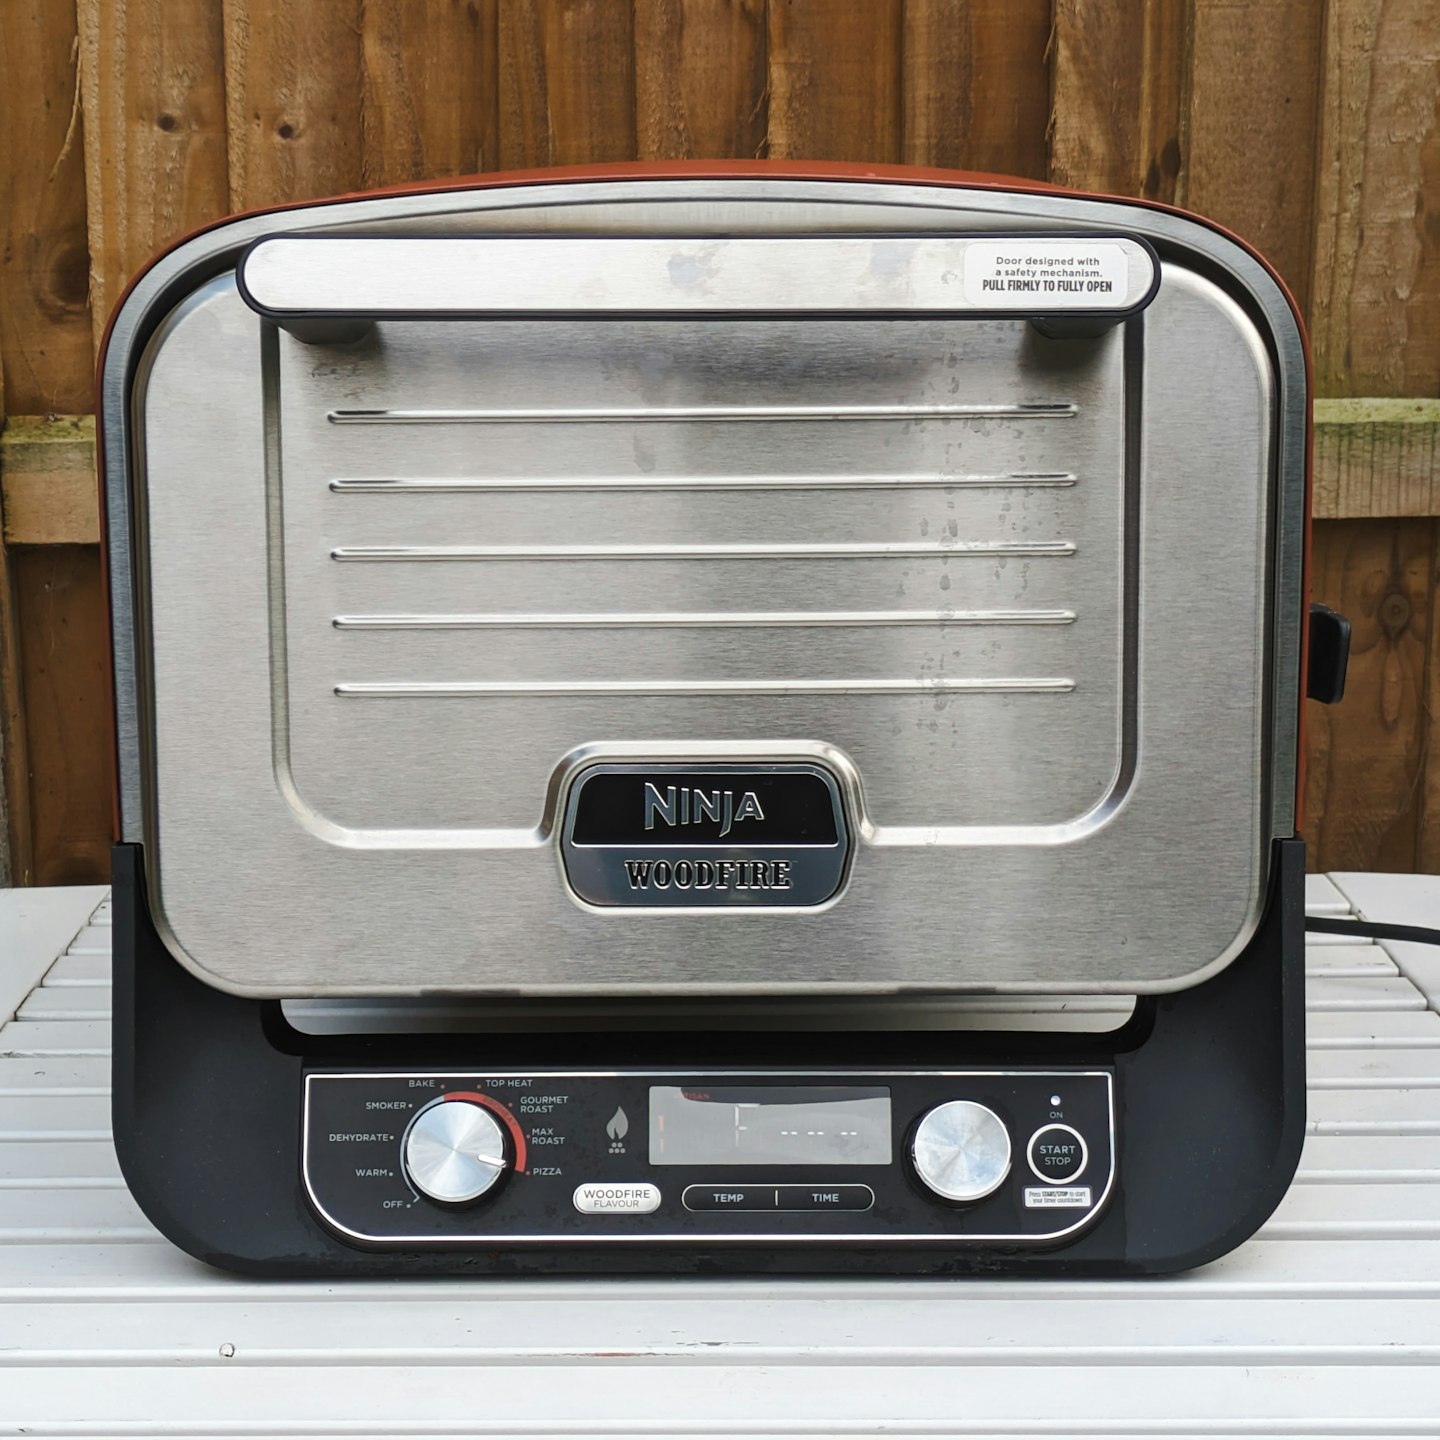 Ninja Woodfire Electric Outdoor Oven